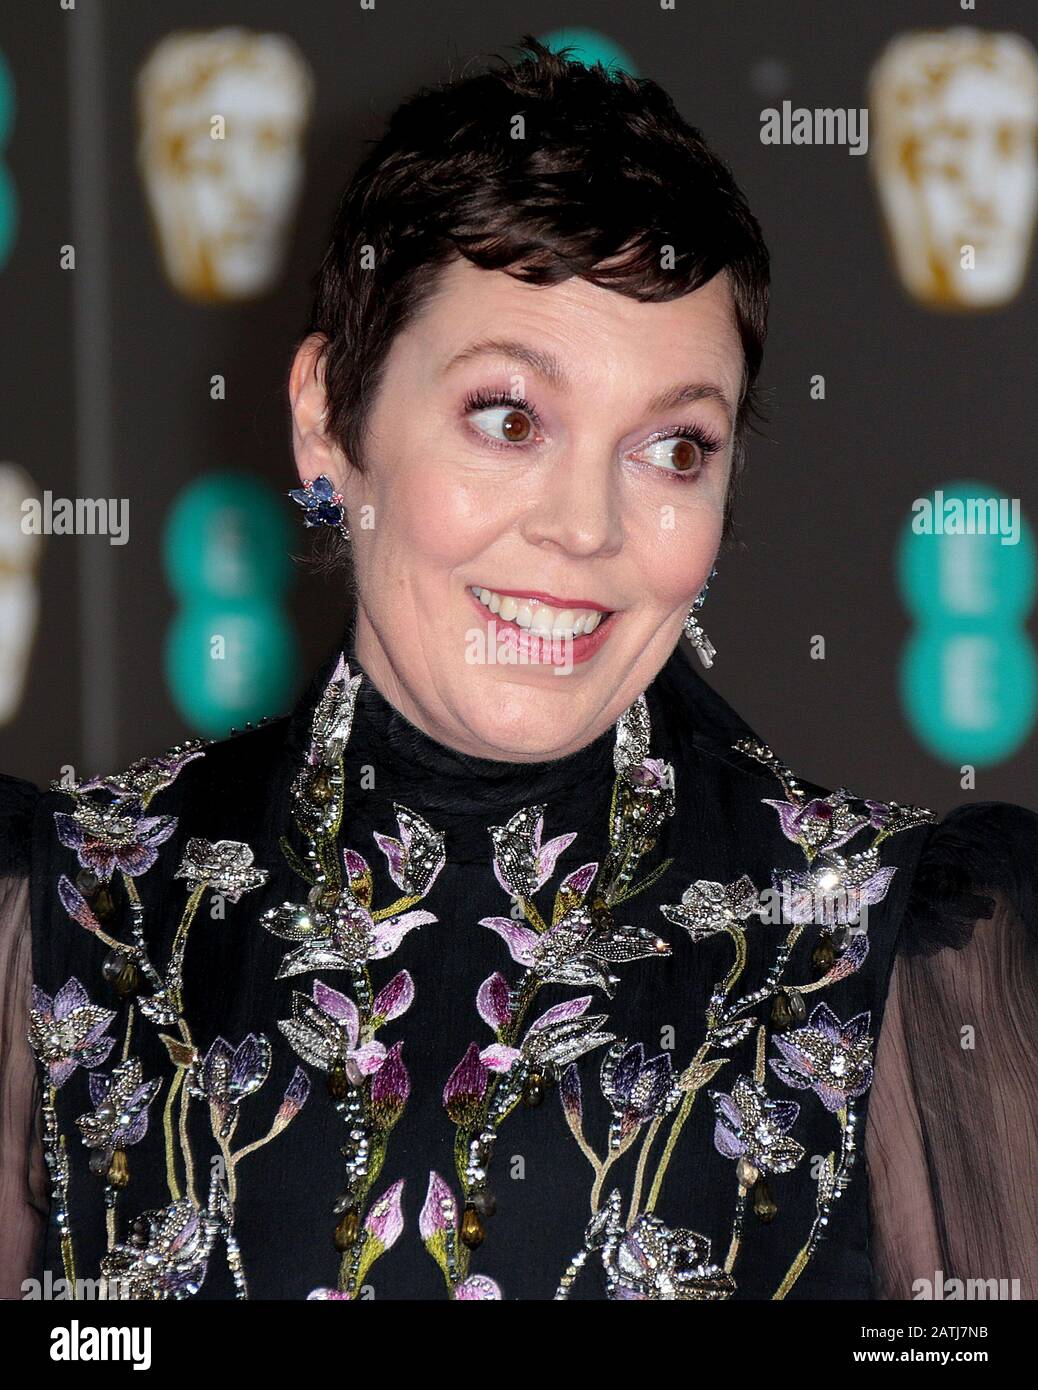 Feb 02, 2020 - London, England, UK - Olivia Coleman attending BAFTA Film Awards 2020, Royal Albert Hall Stock Photo